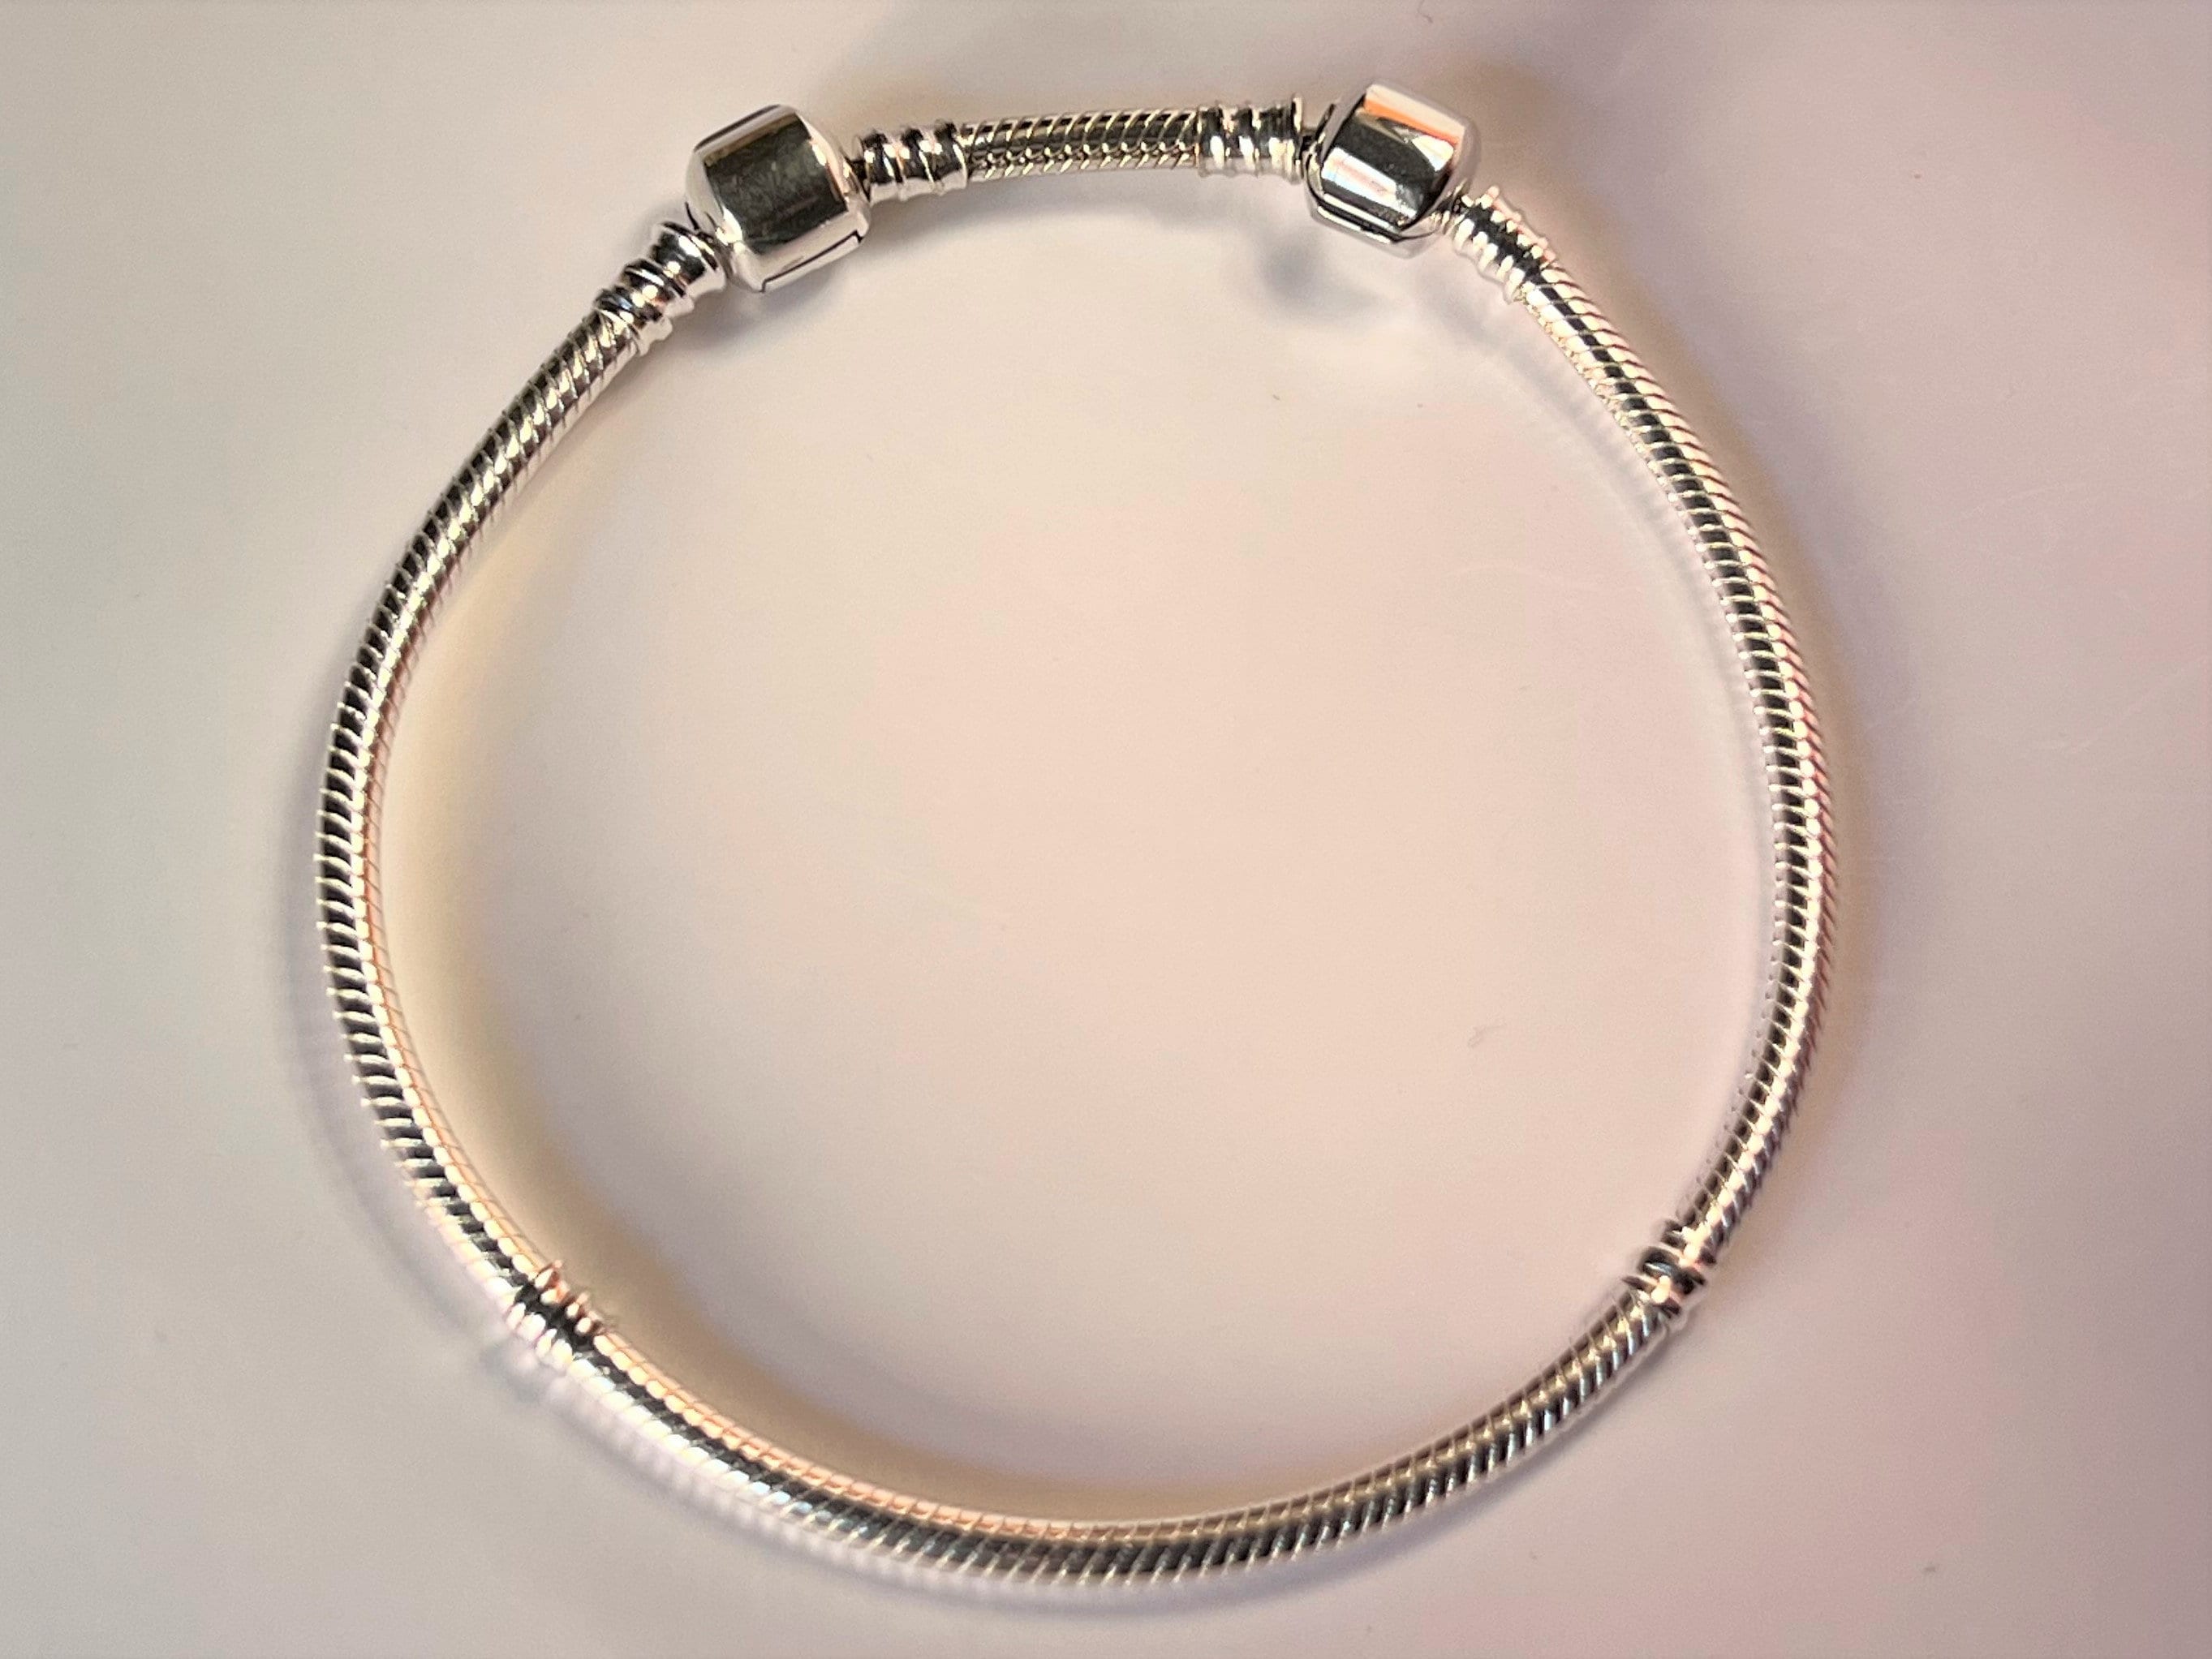  Pandora style bracelet extender, womens charm snake